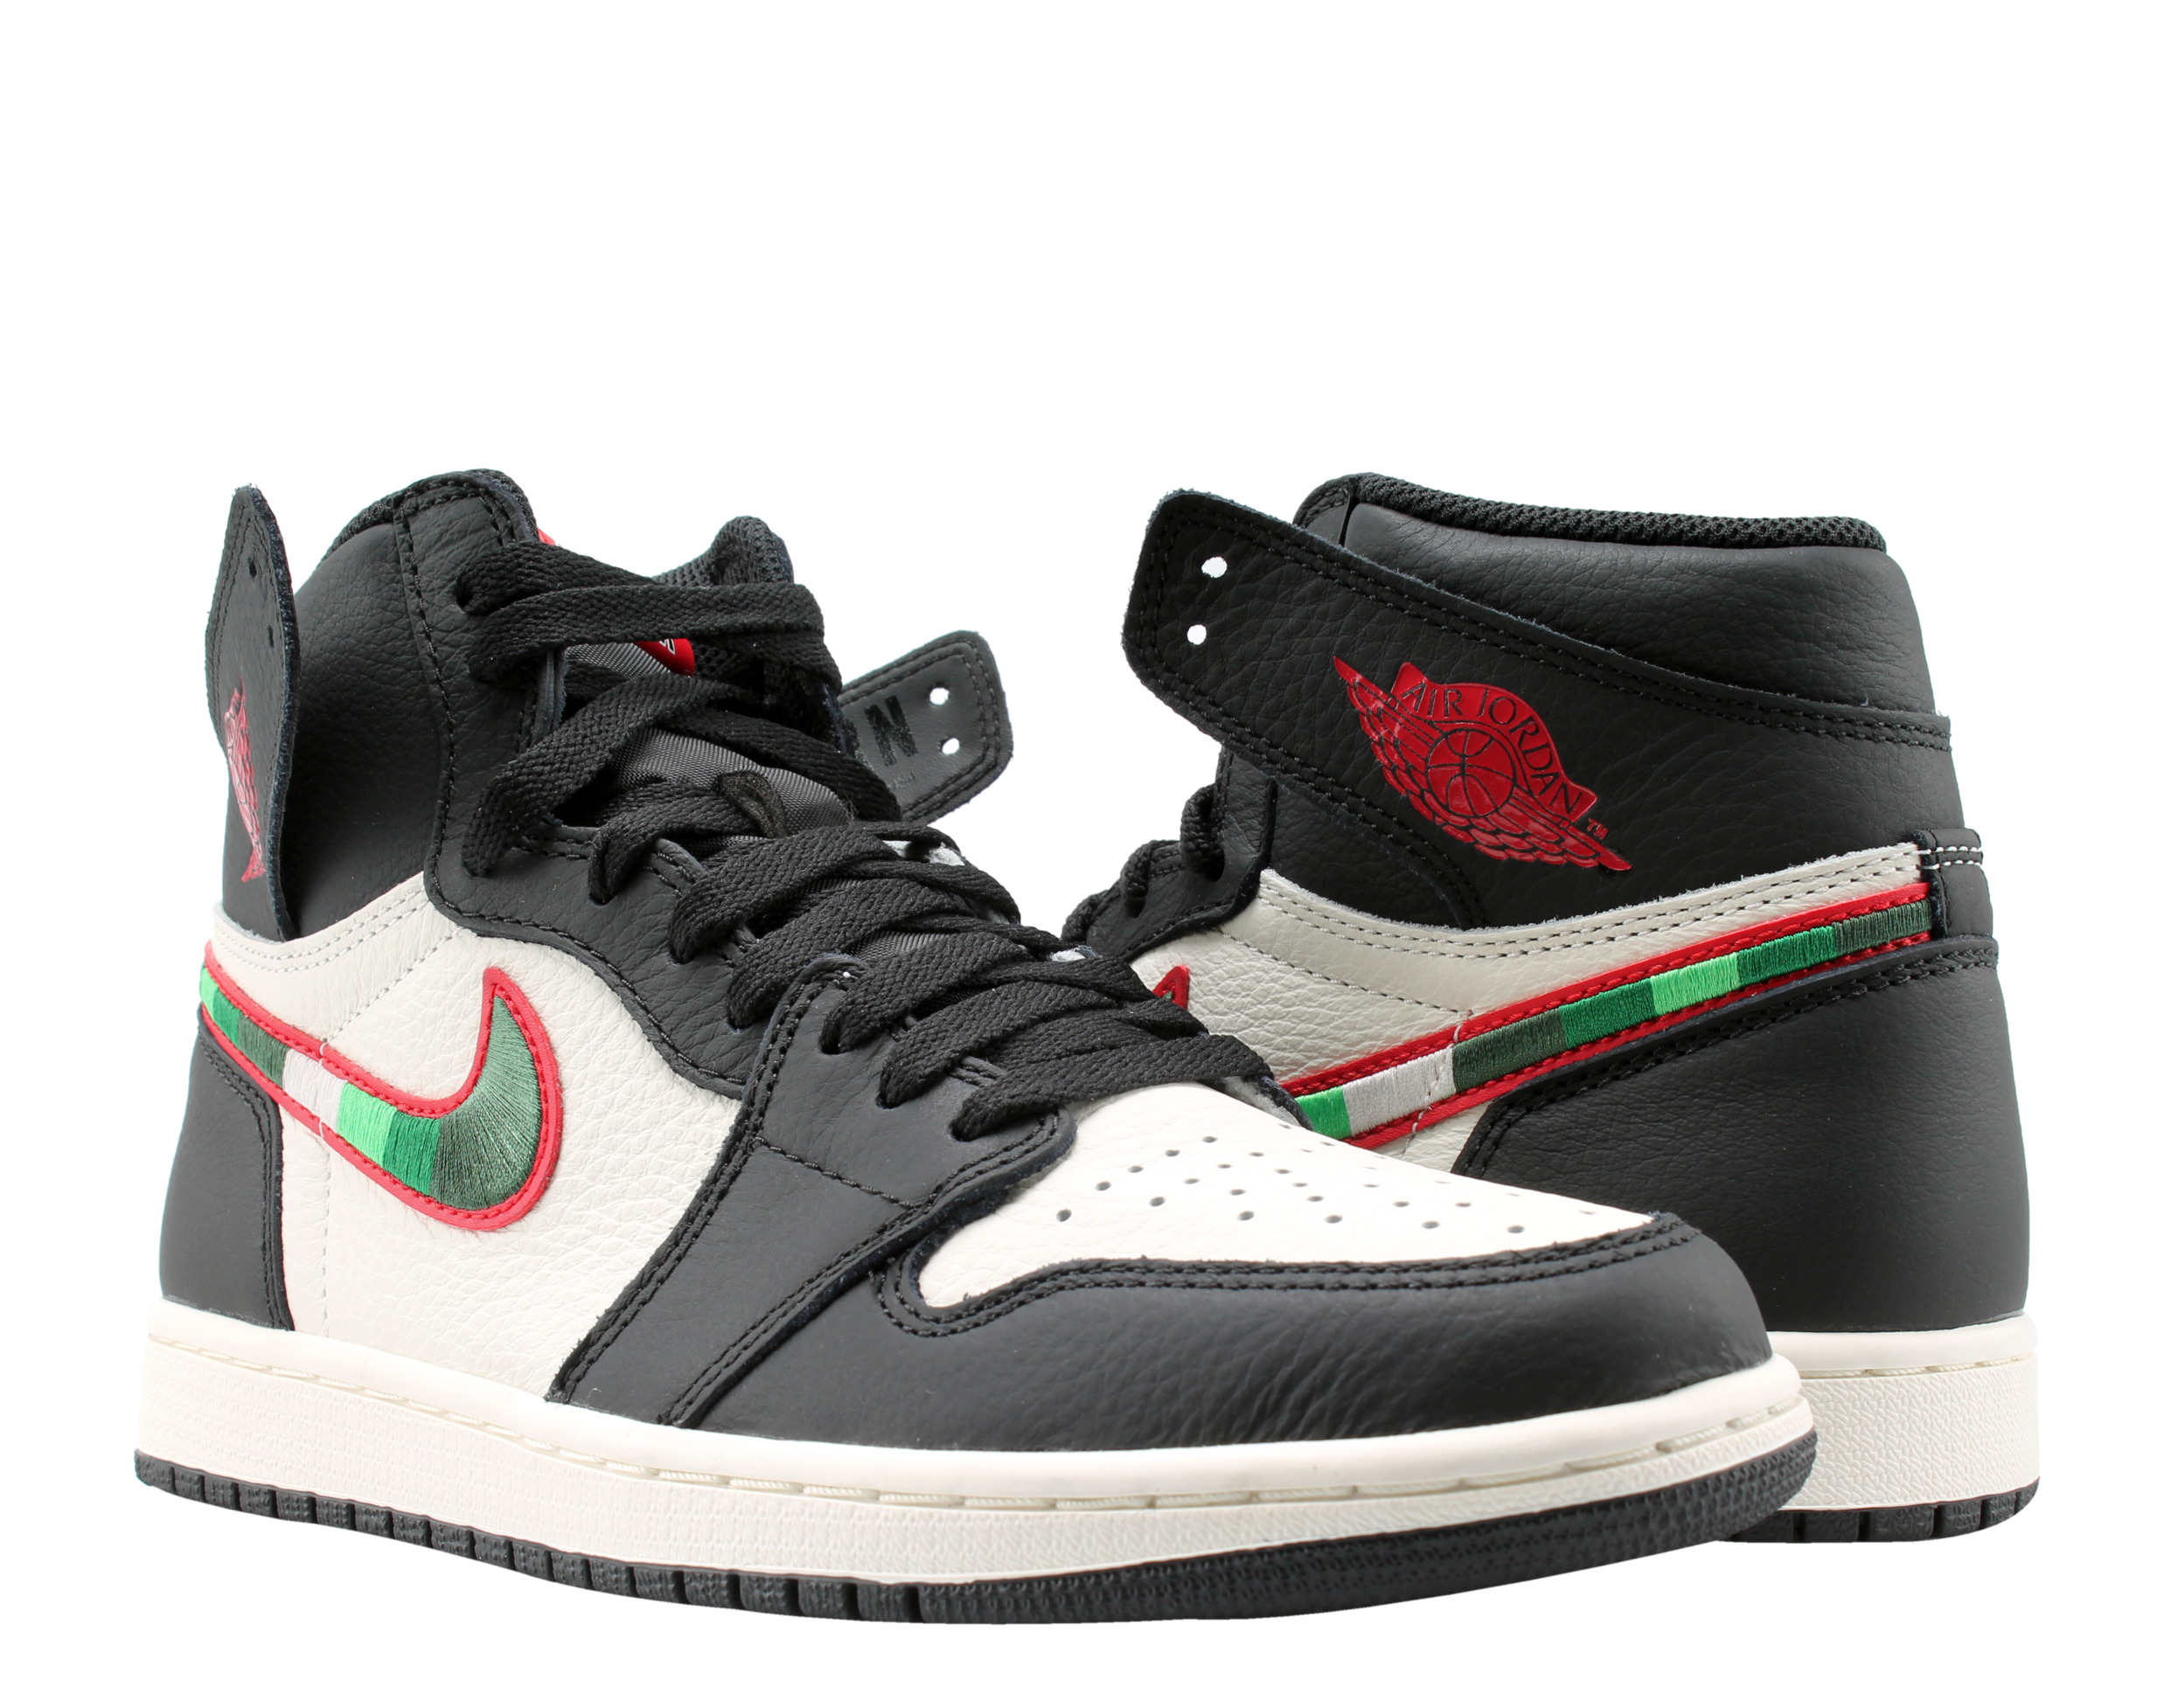 Nike Air Jordan 1 Retro High A Star Is Born Men's Basketball Shoes 555088-015 - image 1 of 6